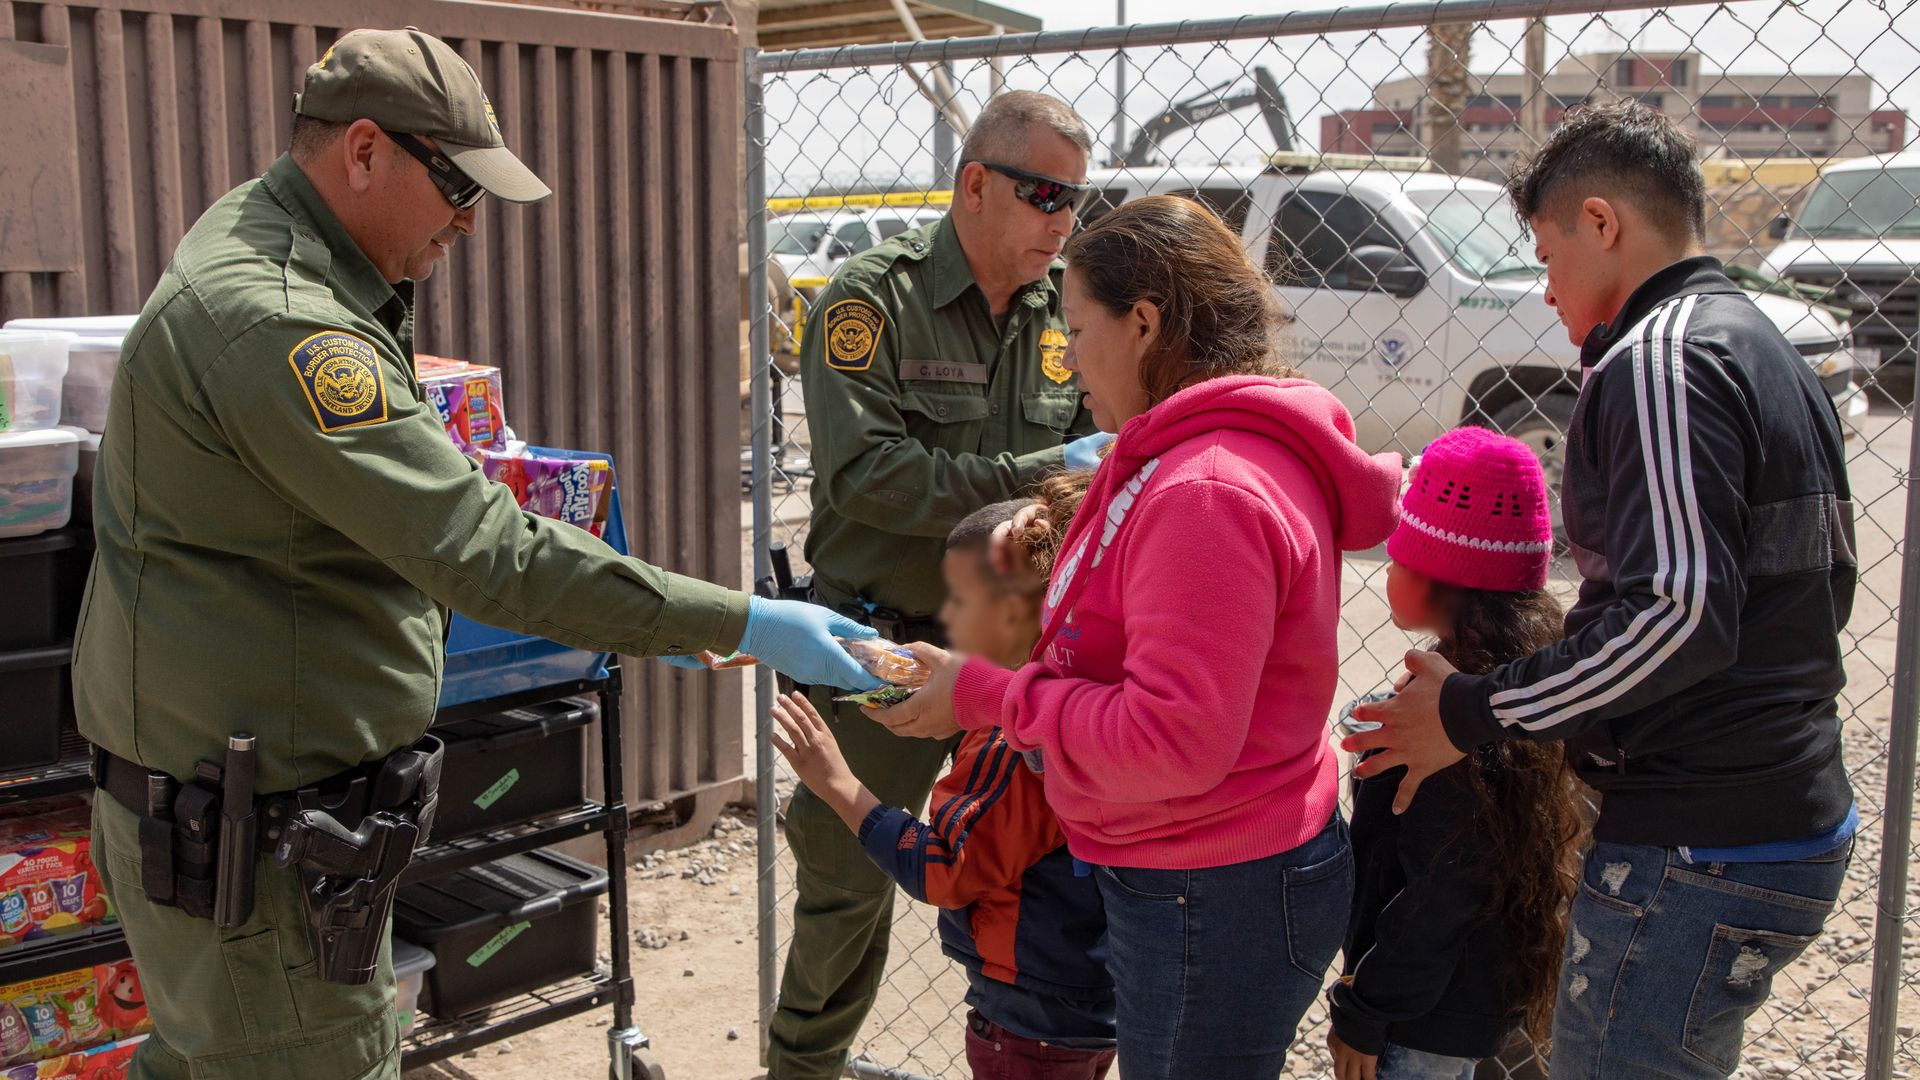 Border patrol agents encountering immigrants at the southern border.